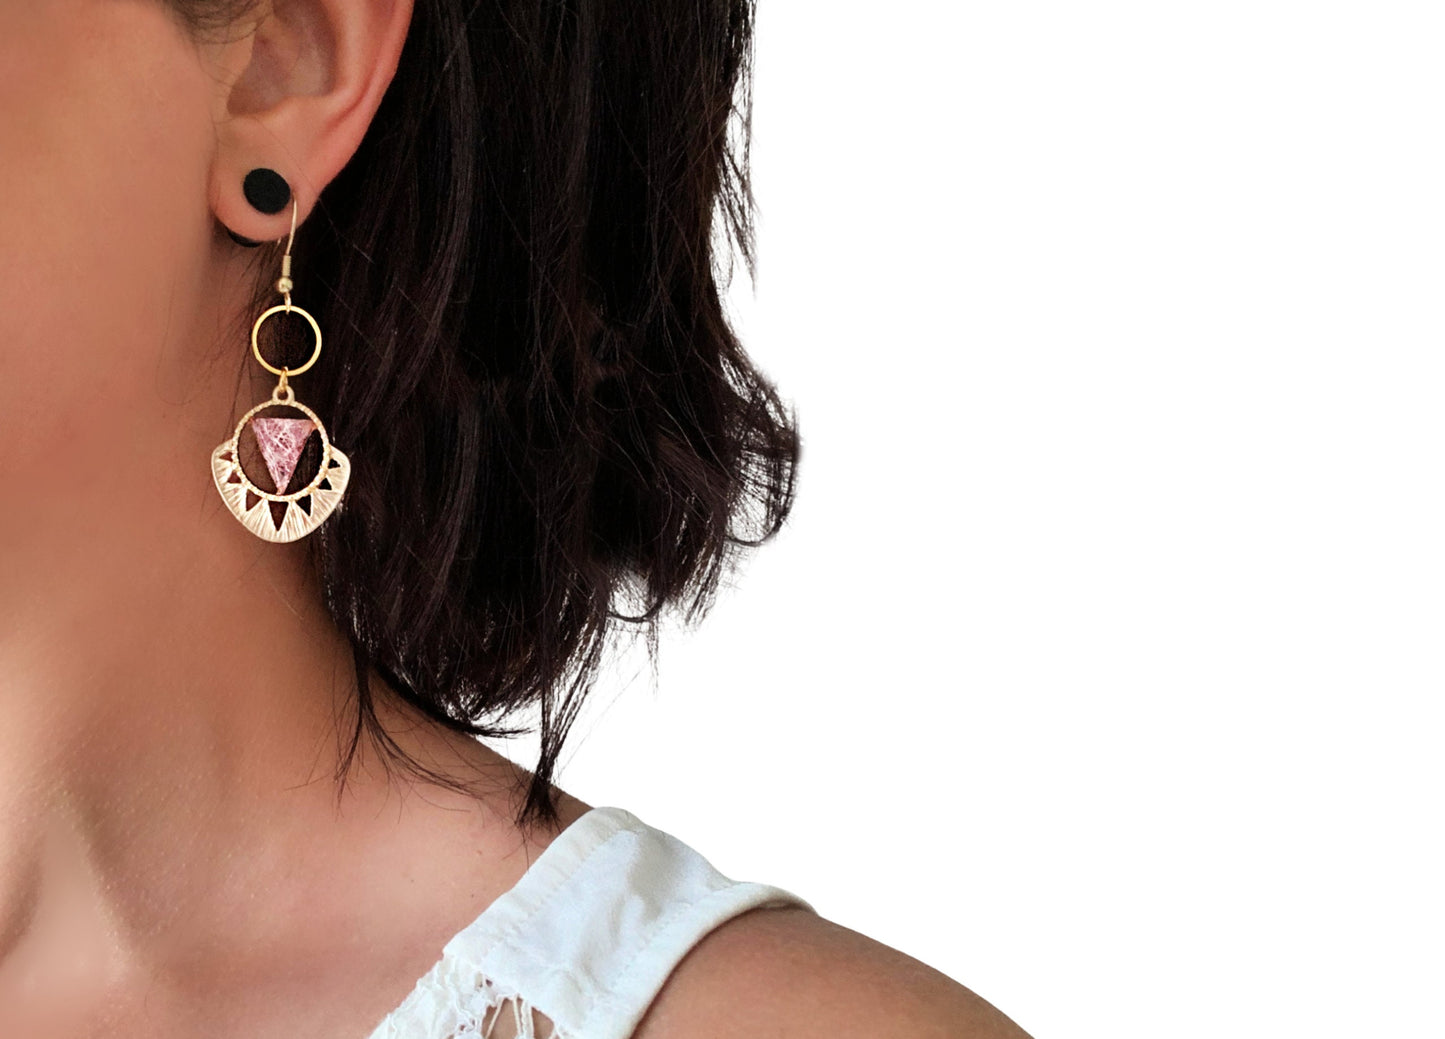 Boho Triangle Earrings in Pink and Gold, Geometric Earrings, Bohemian Tribal Chic Dangle Earrings, Celestial Earrings, Cut Out Earrings